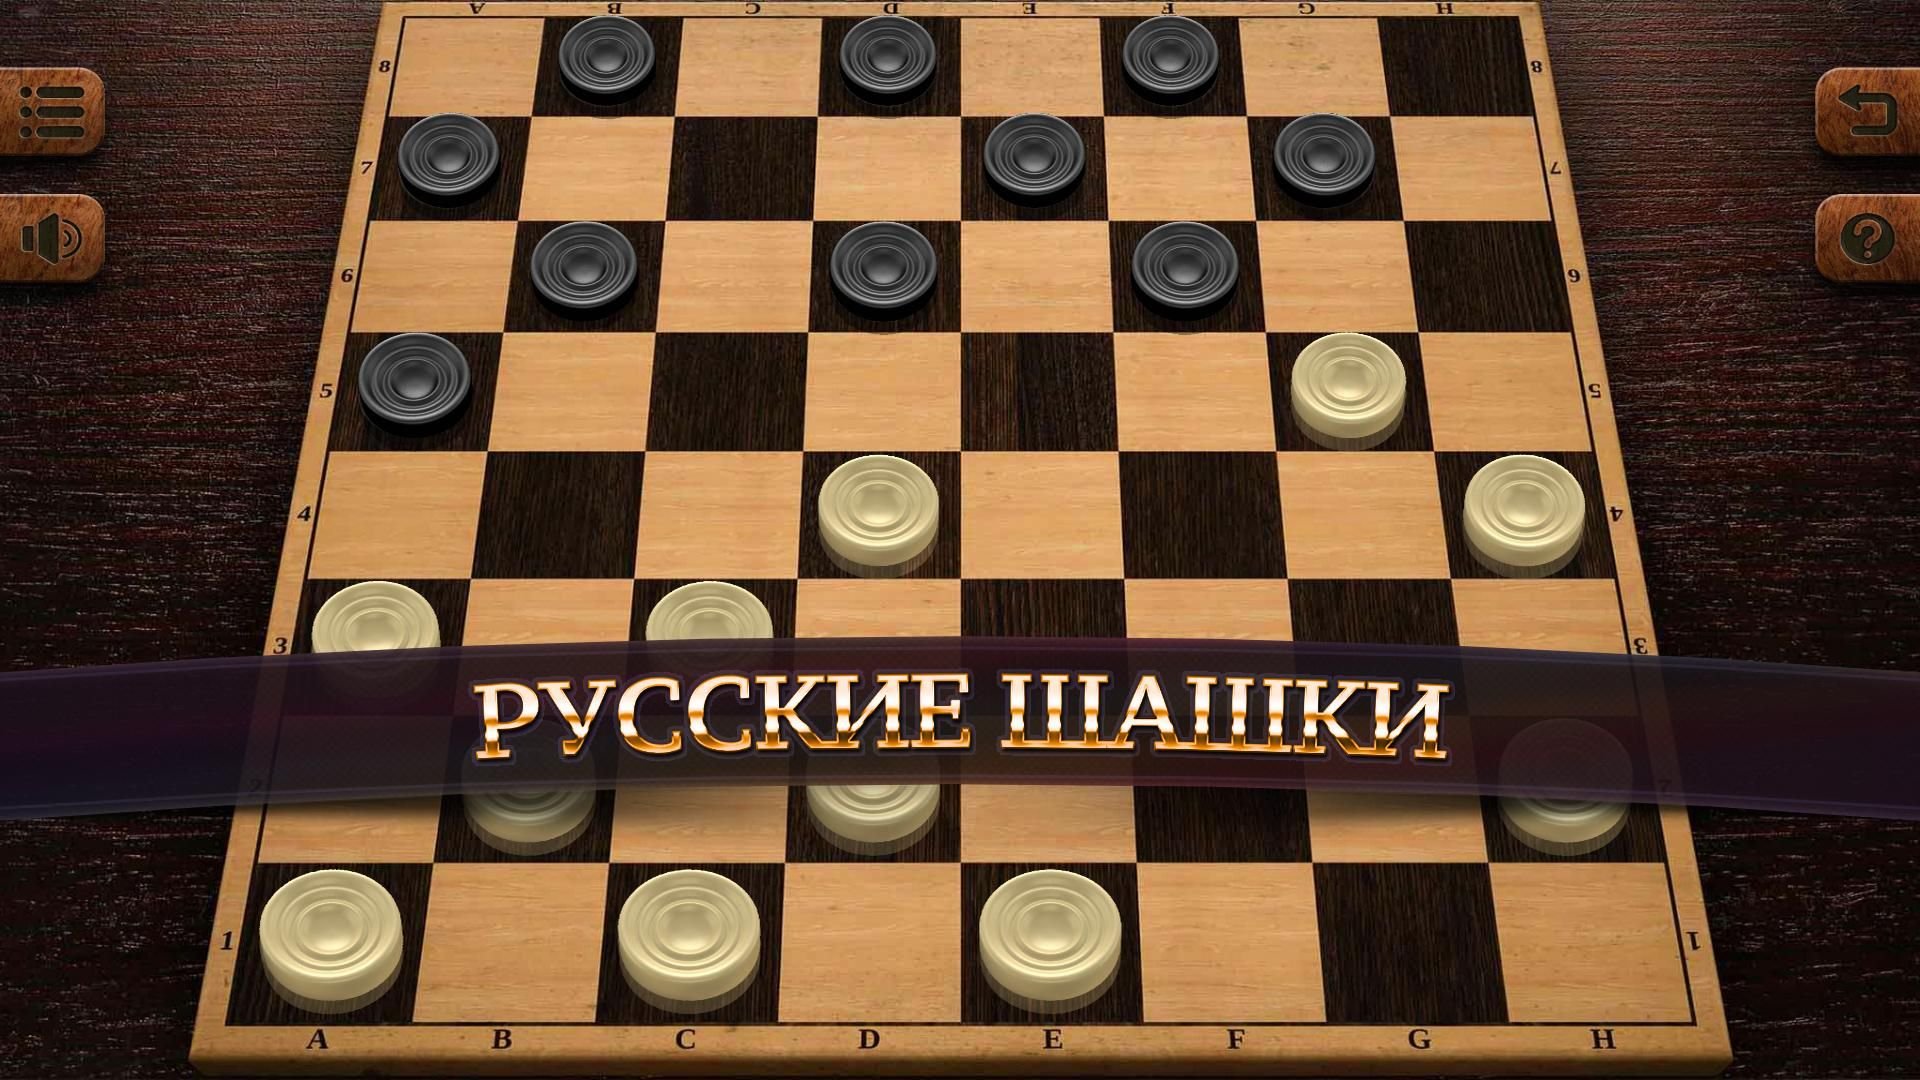 Игры шашки с игроками. Русские шашки 8.1.50. Чекерс шашки. Русские шашки 3.11.